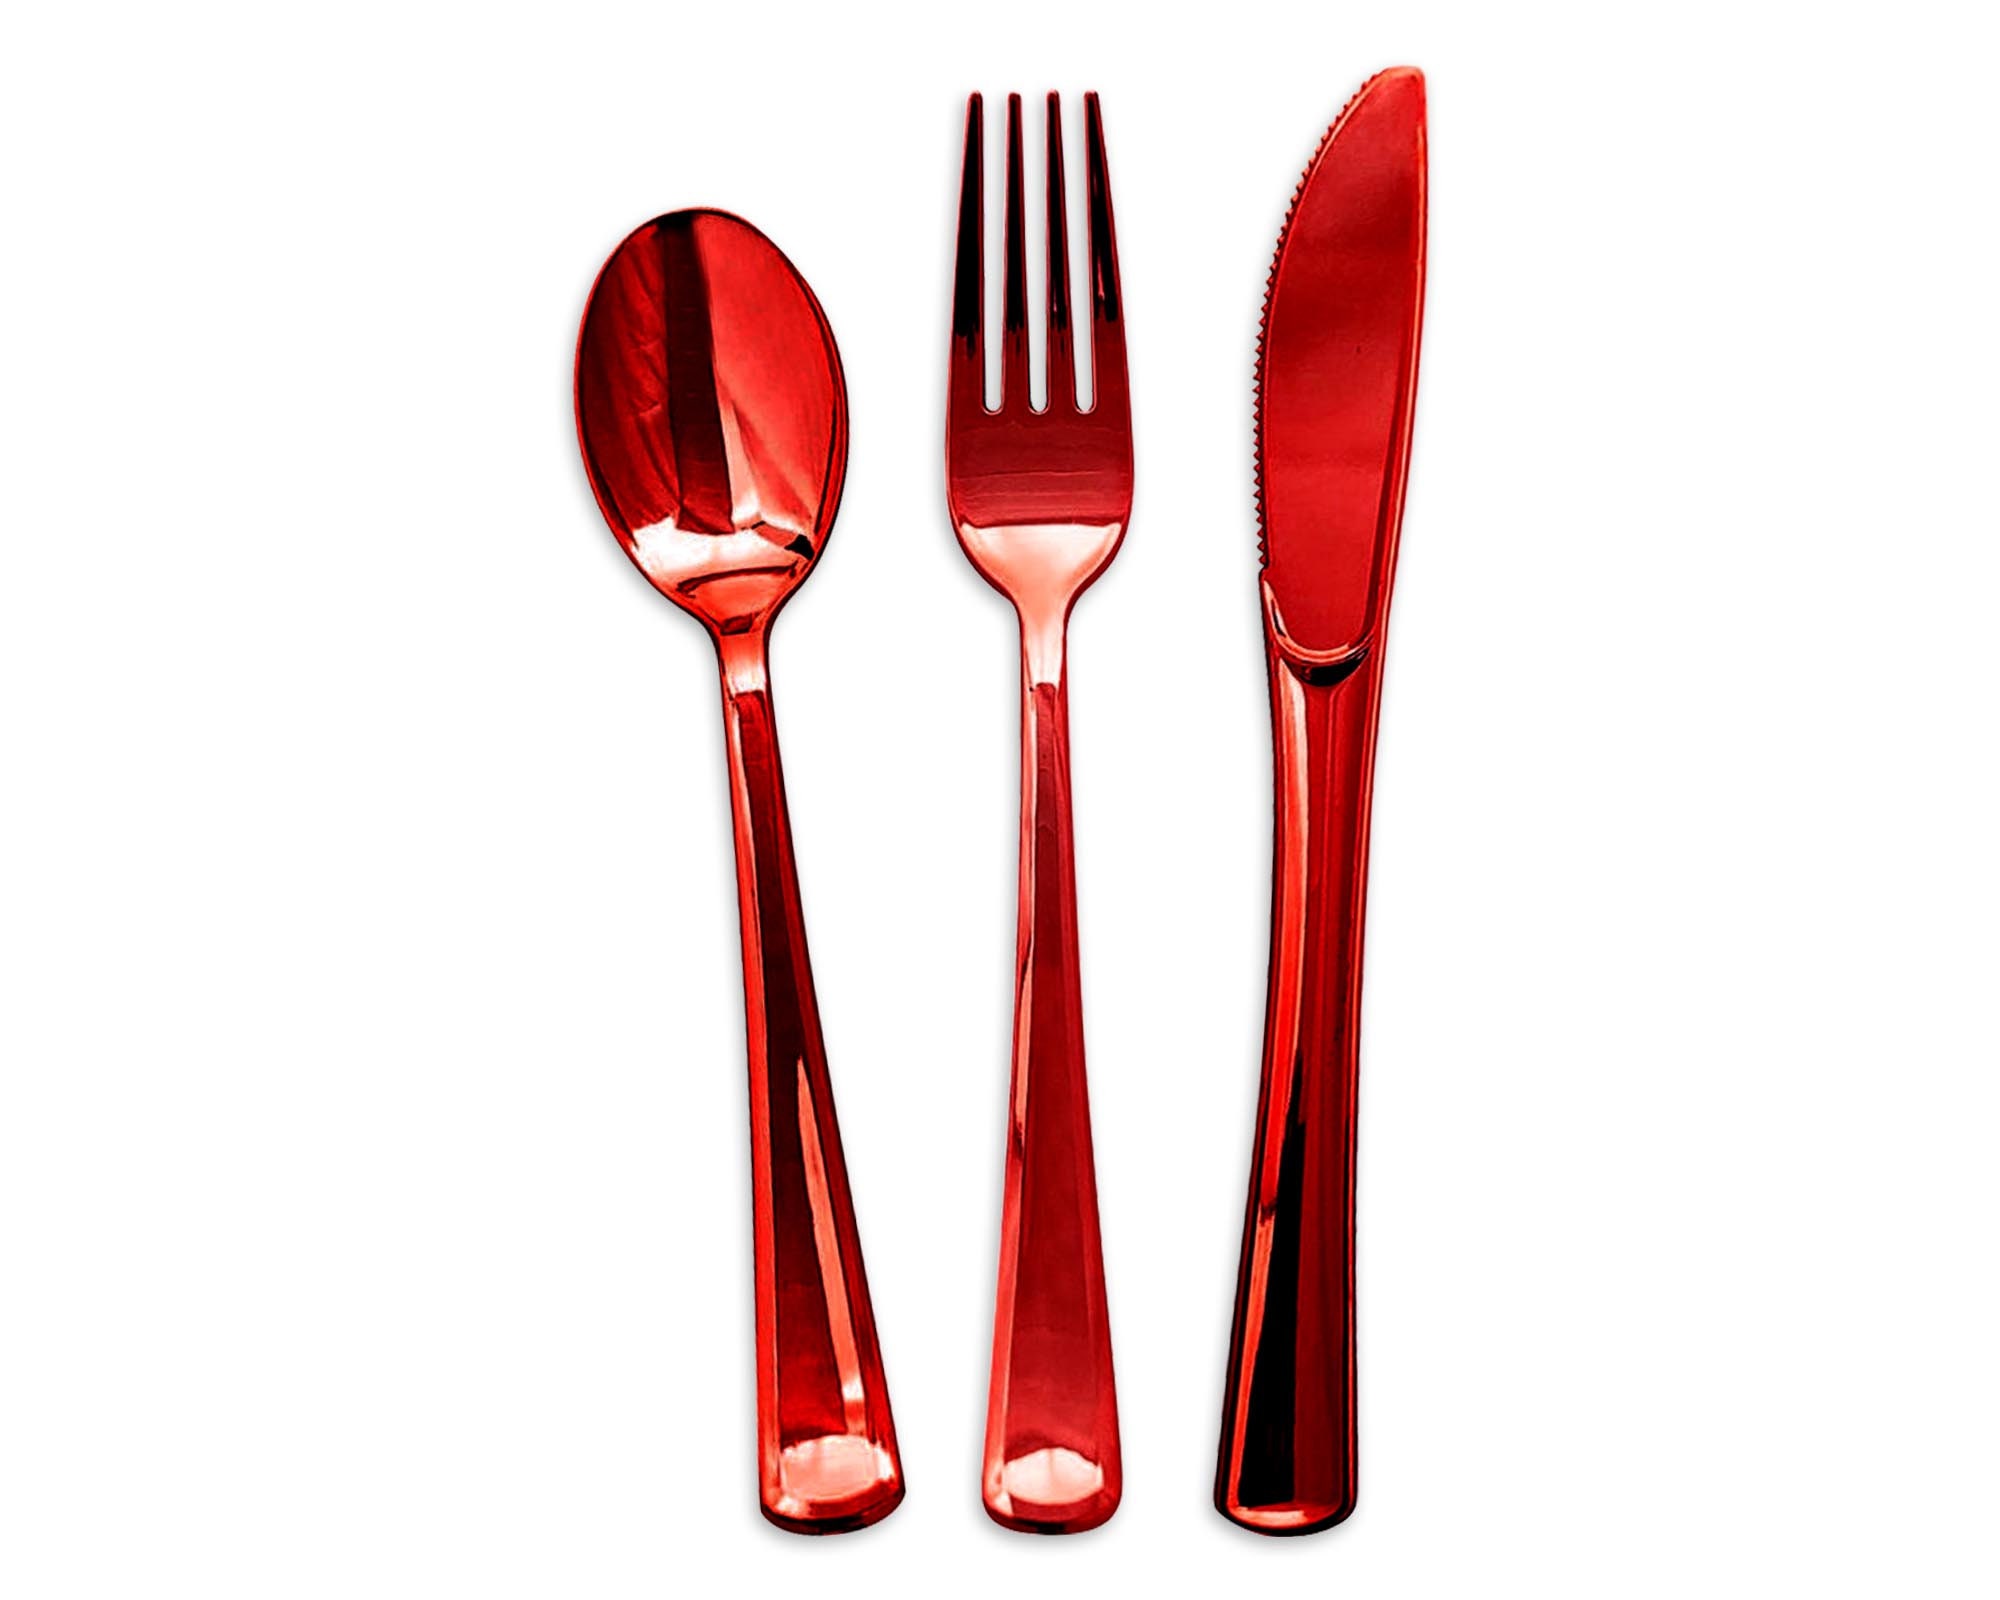 Plastic Cutlery - Disposable Cutlery, Disposable Utensil and Flatware, Custom Plastic Cutlery Design & Plastic Tableware Manufacturing